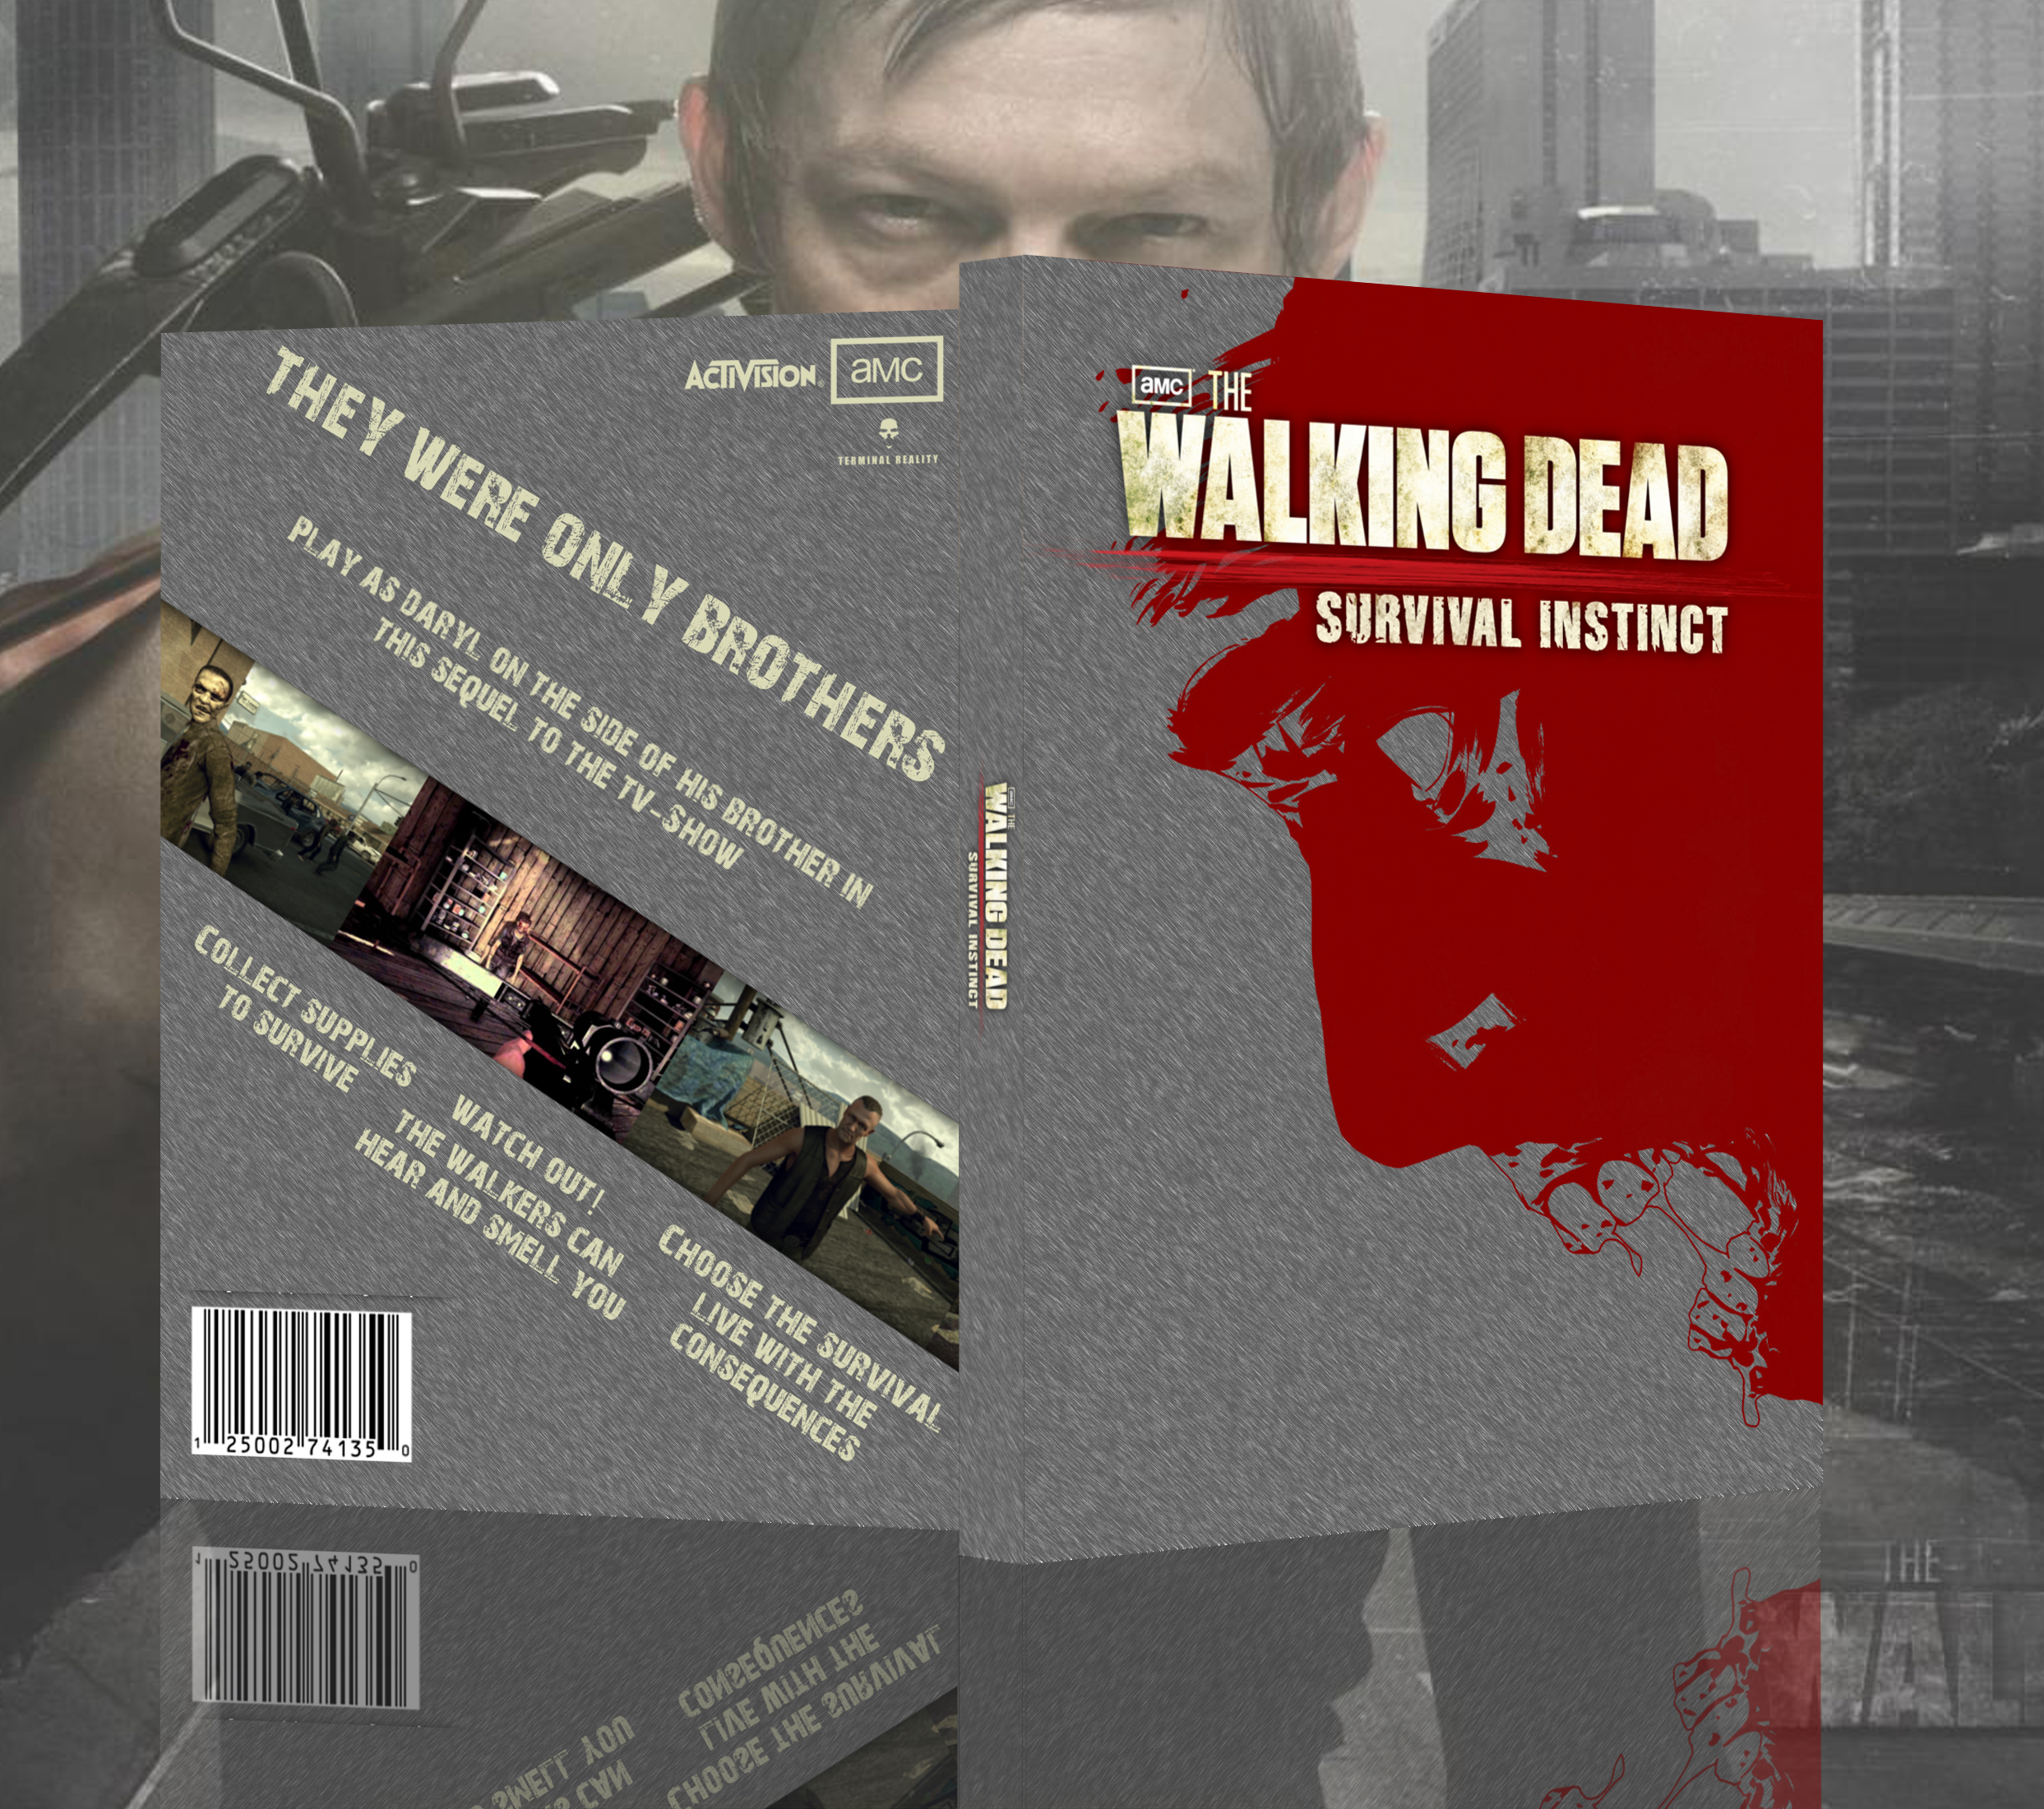 The Walking Dead: Survival Instinct box cover